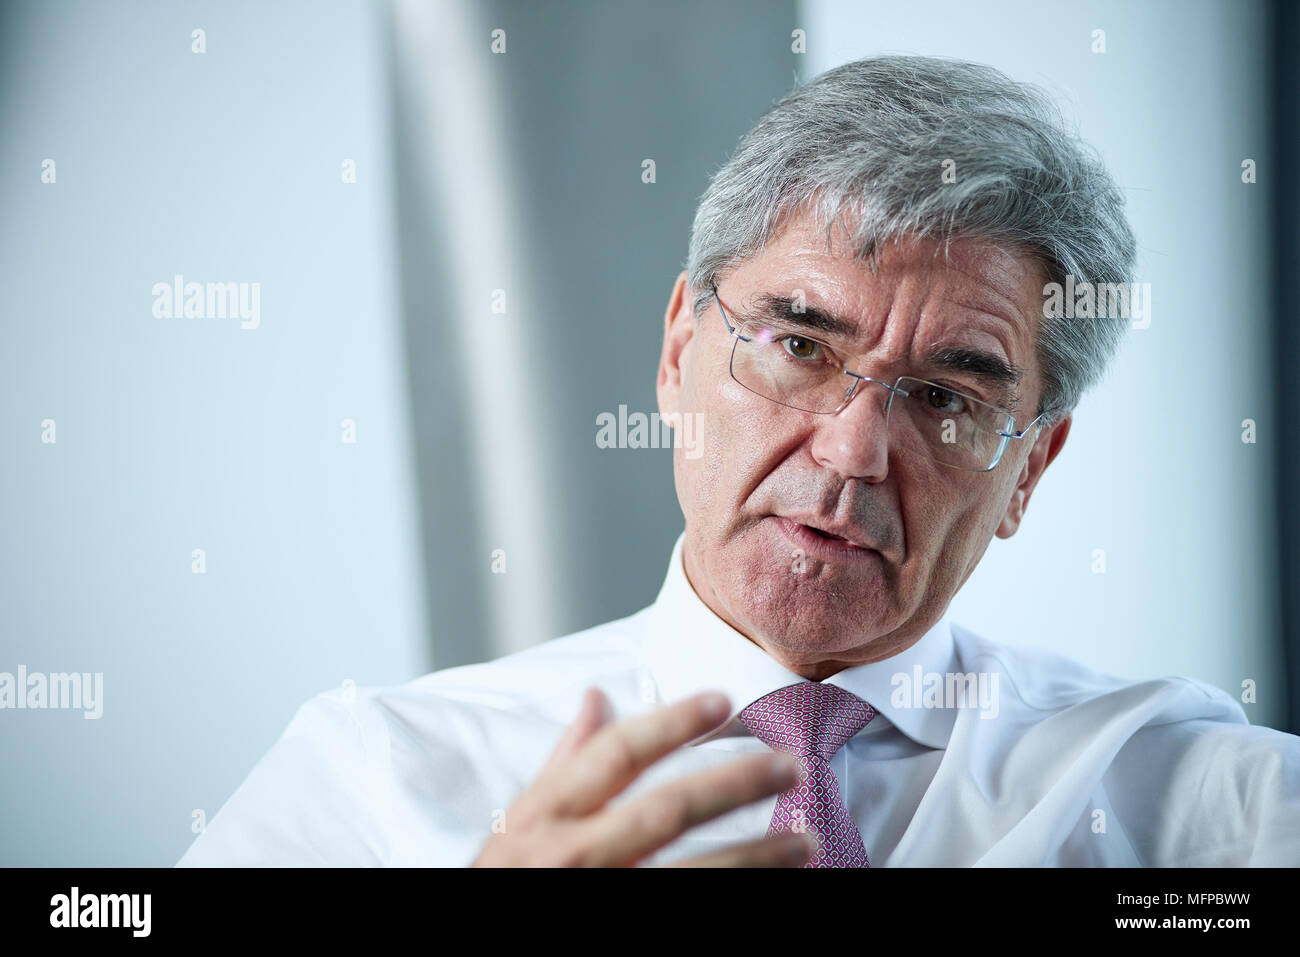 Joe Kaeser, CEO of Siemens AG Stock Photo